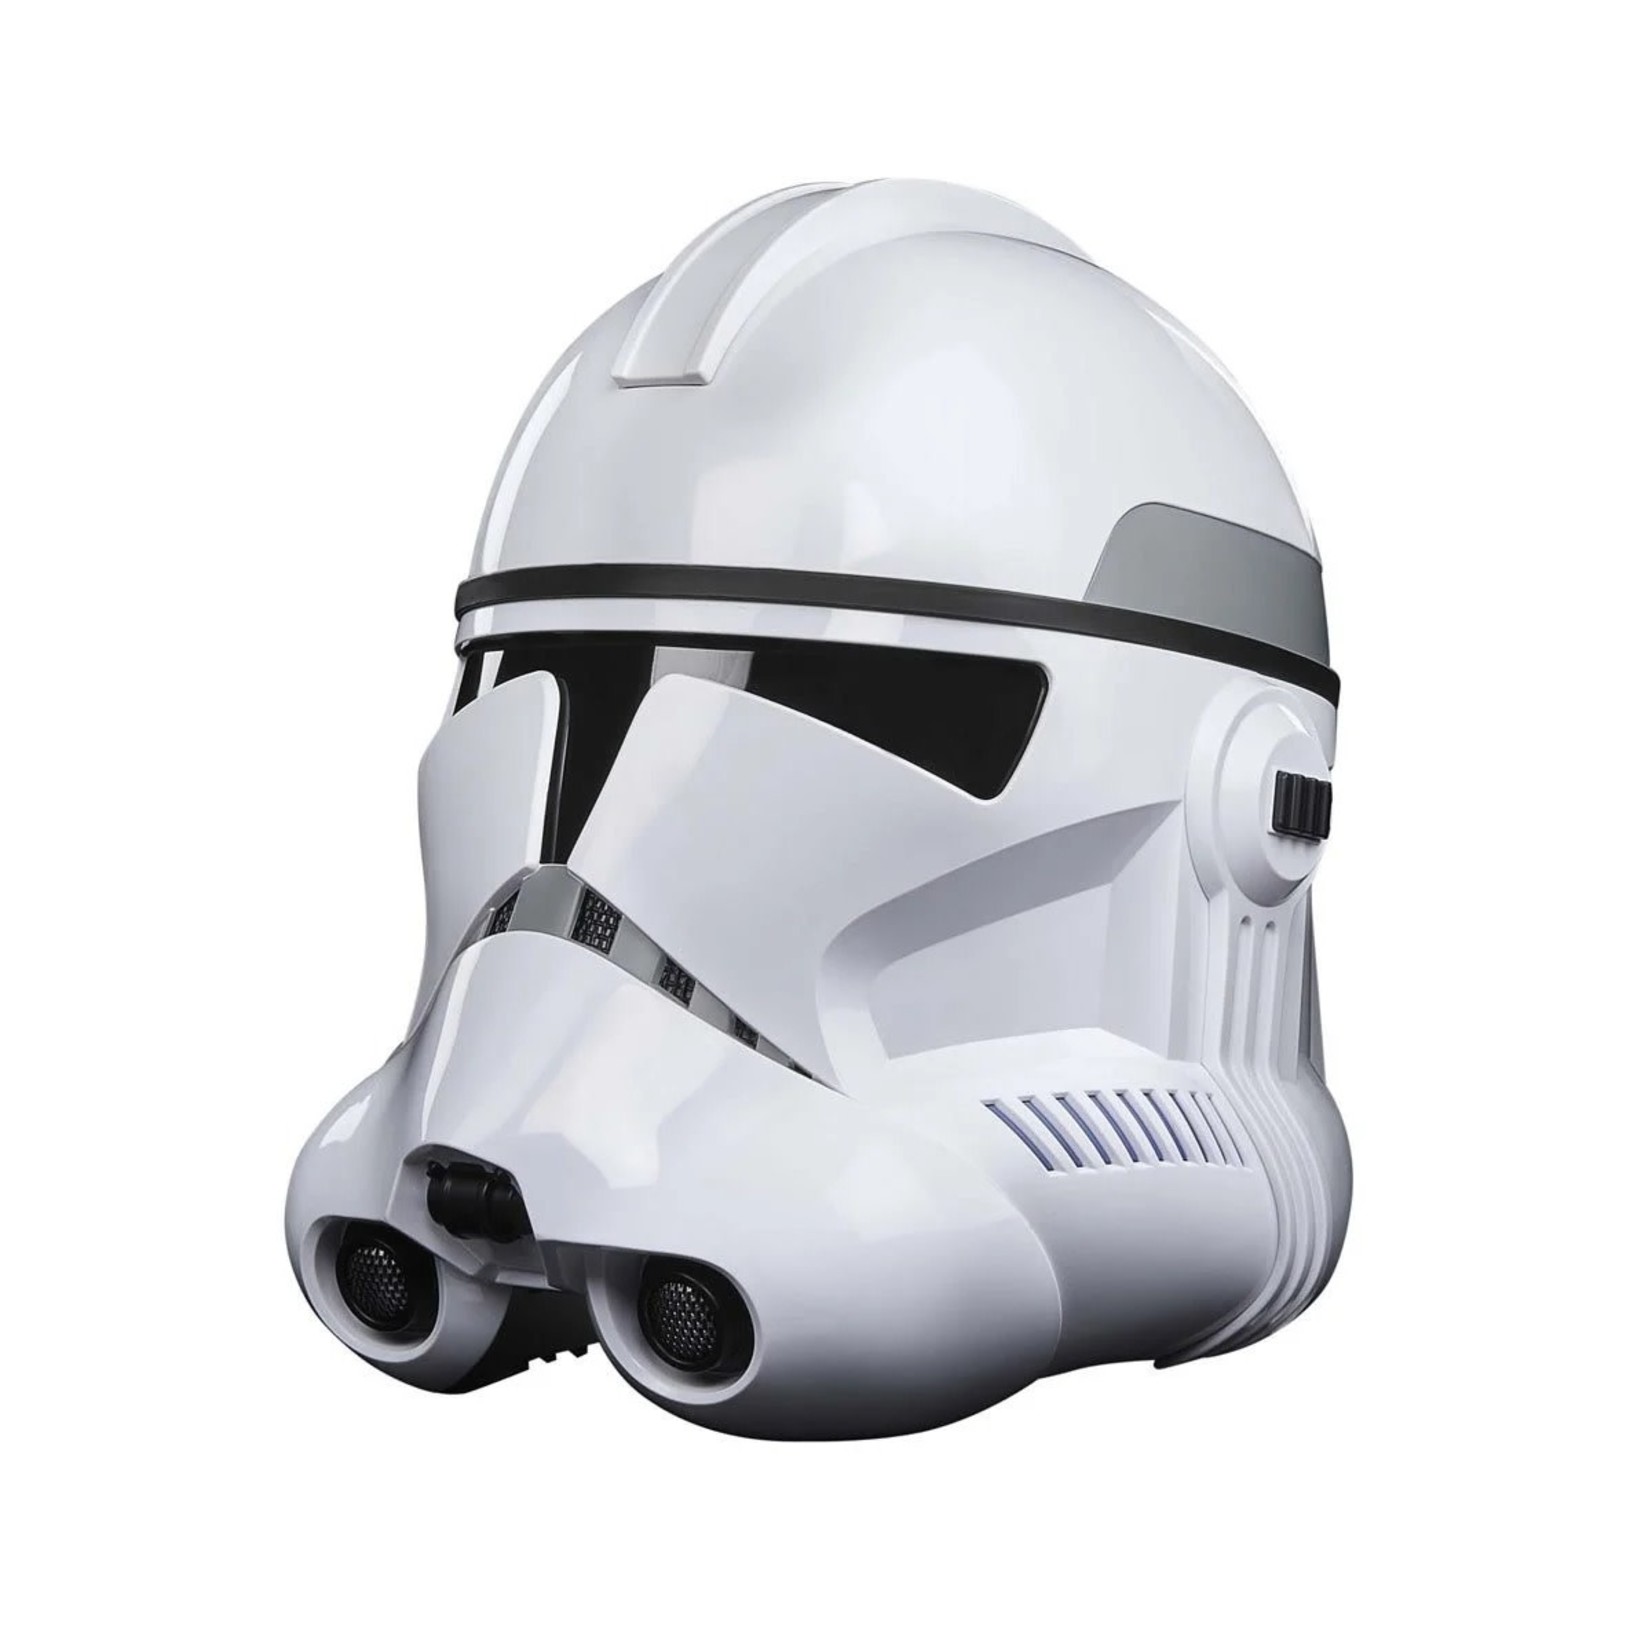 Star Wars The Black Series Star Wars The Black Series Phase II Clone Trooper Premium Electronic Helmet Prop Replica